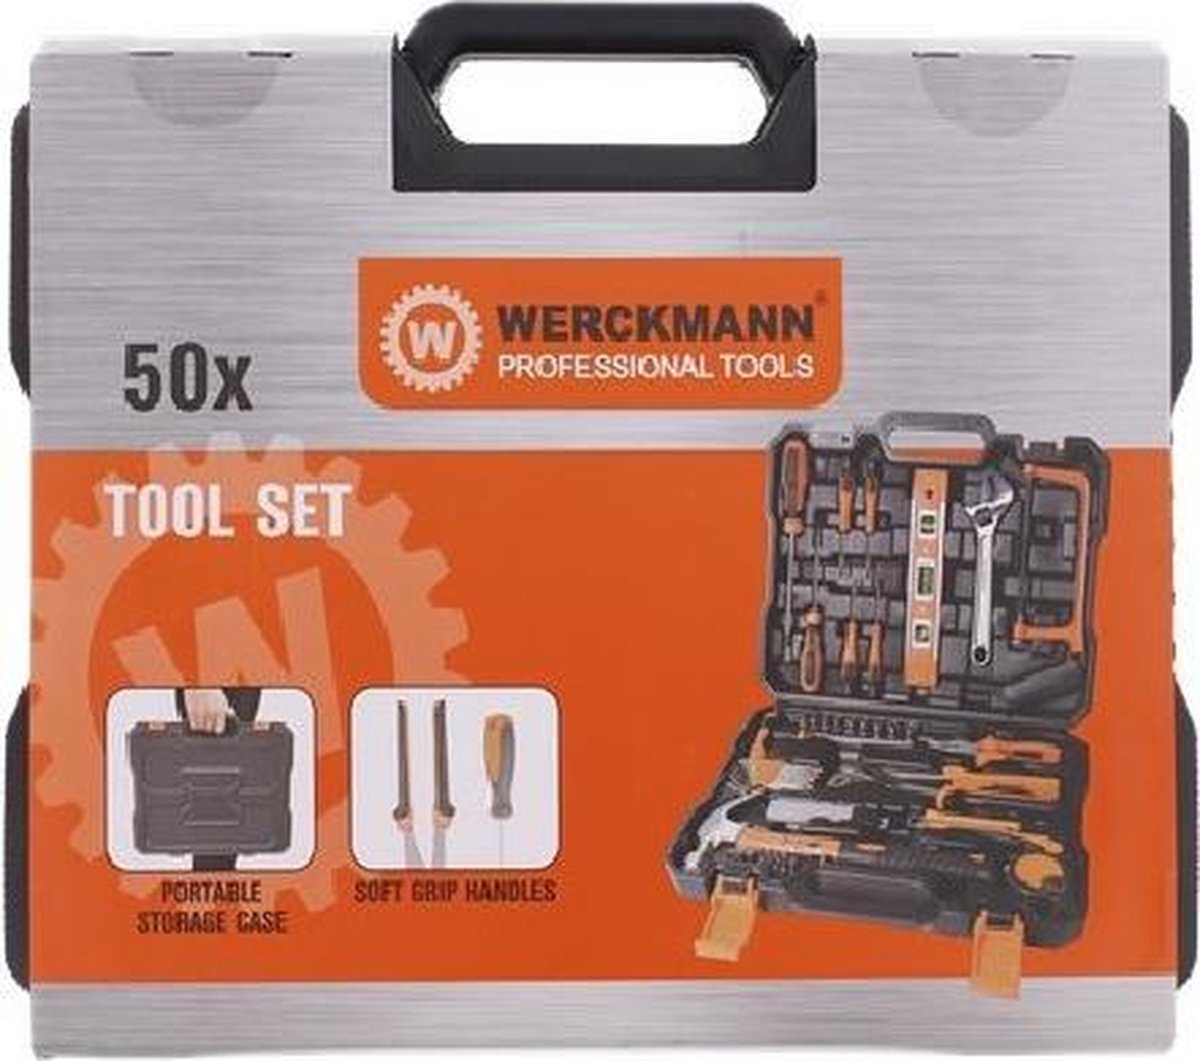 Werckmann Professional Tools Sale, 50% OFF | www.propellermadrid.com